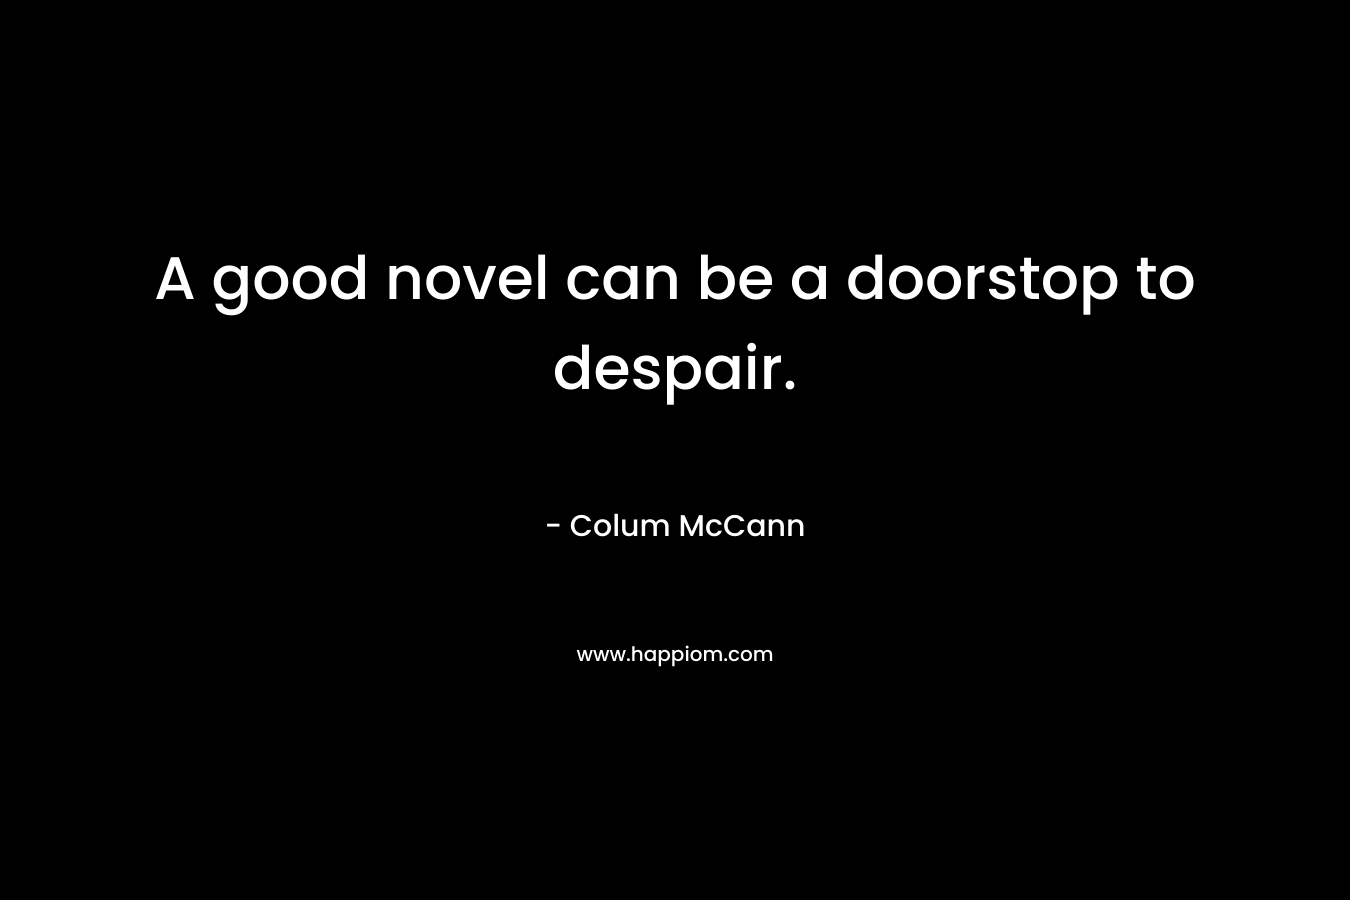 A good novel can be a doorstop to despair.